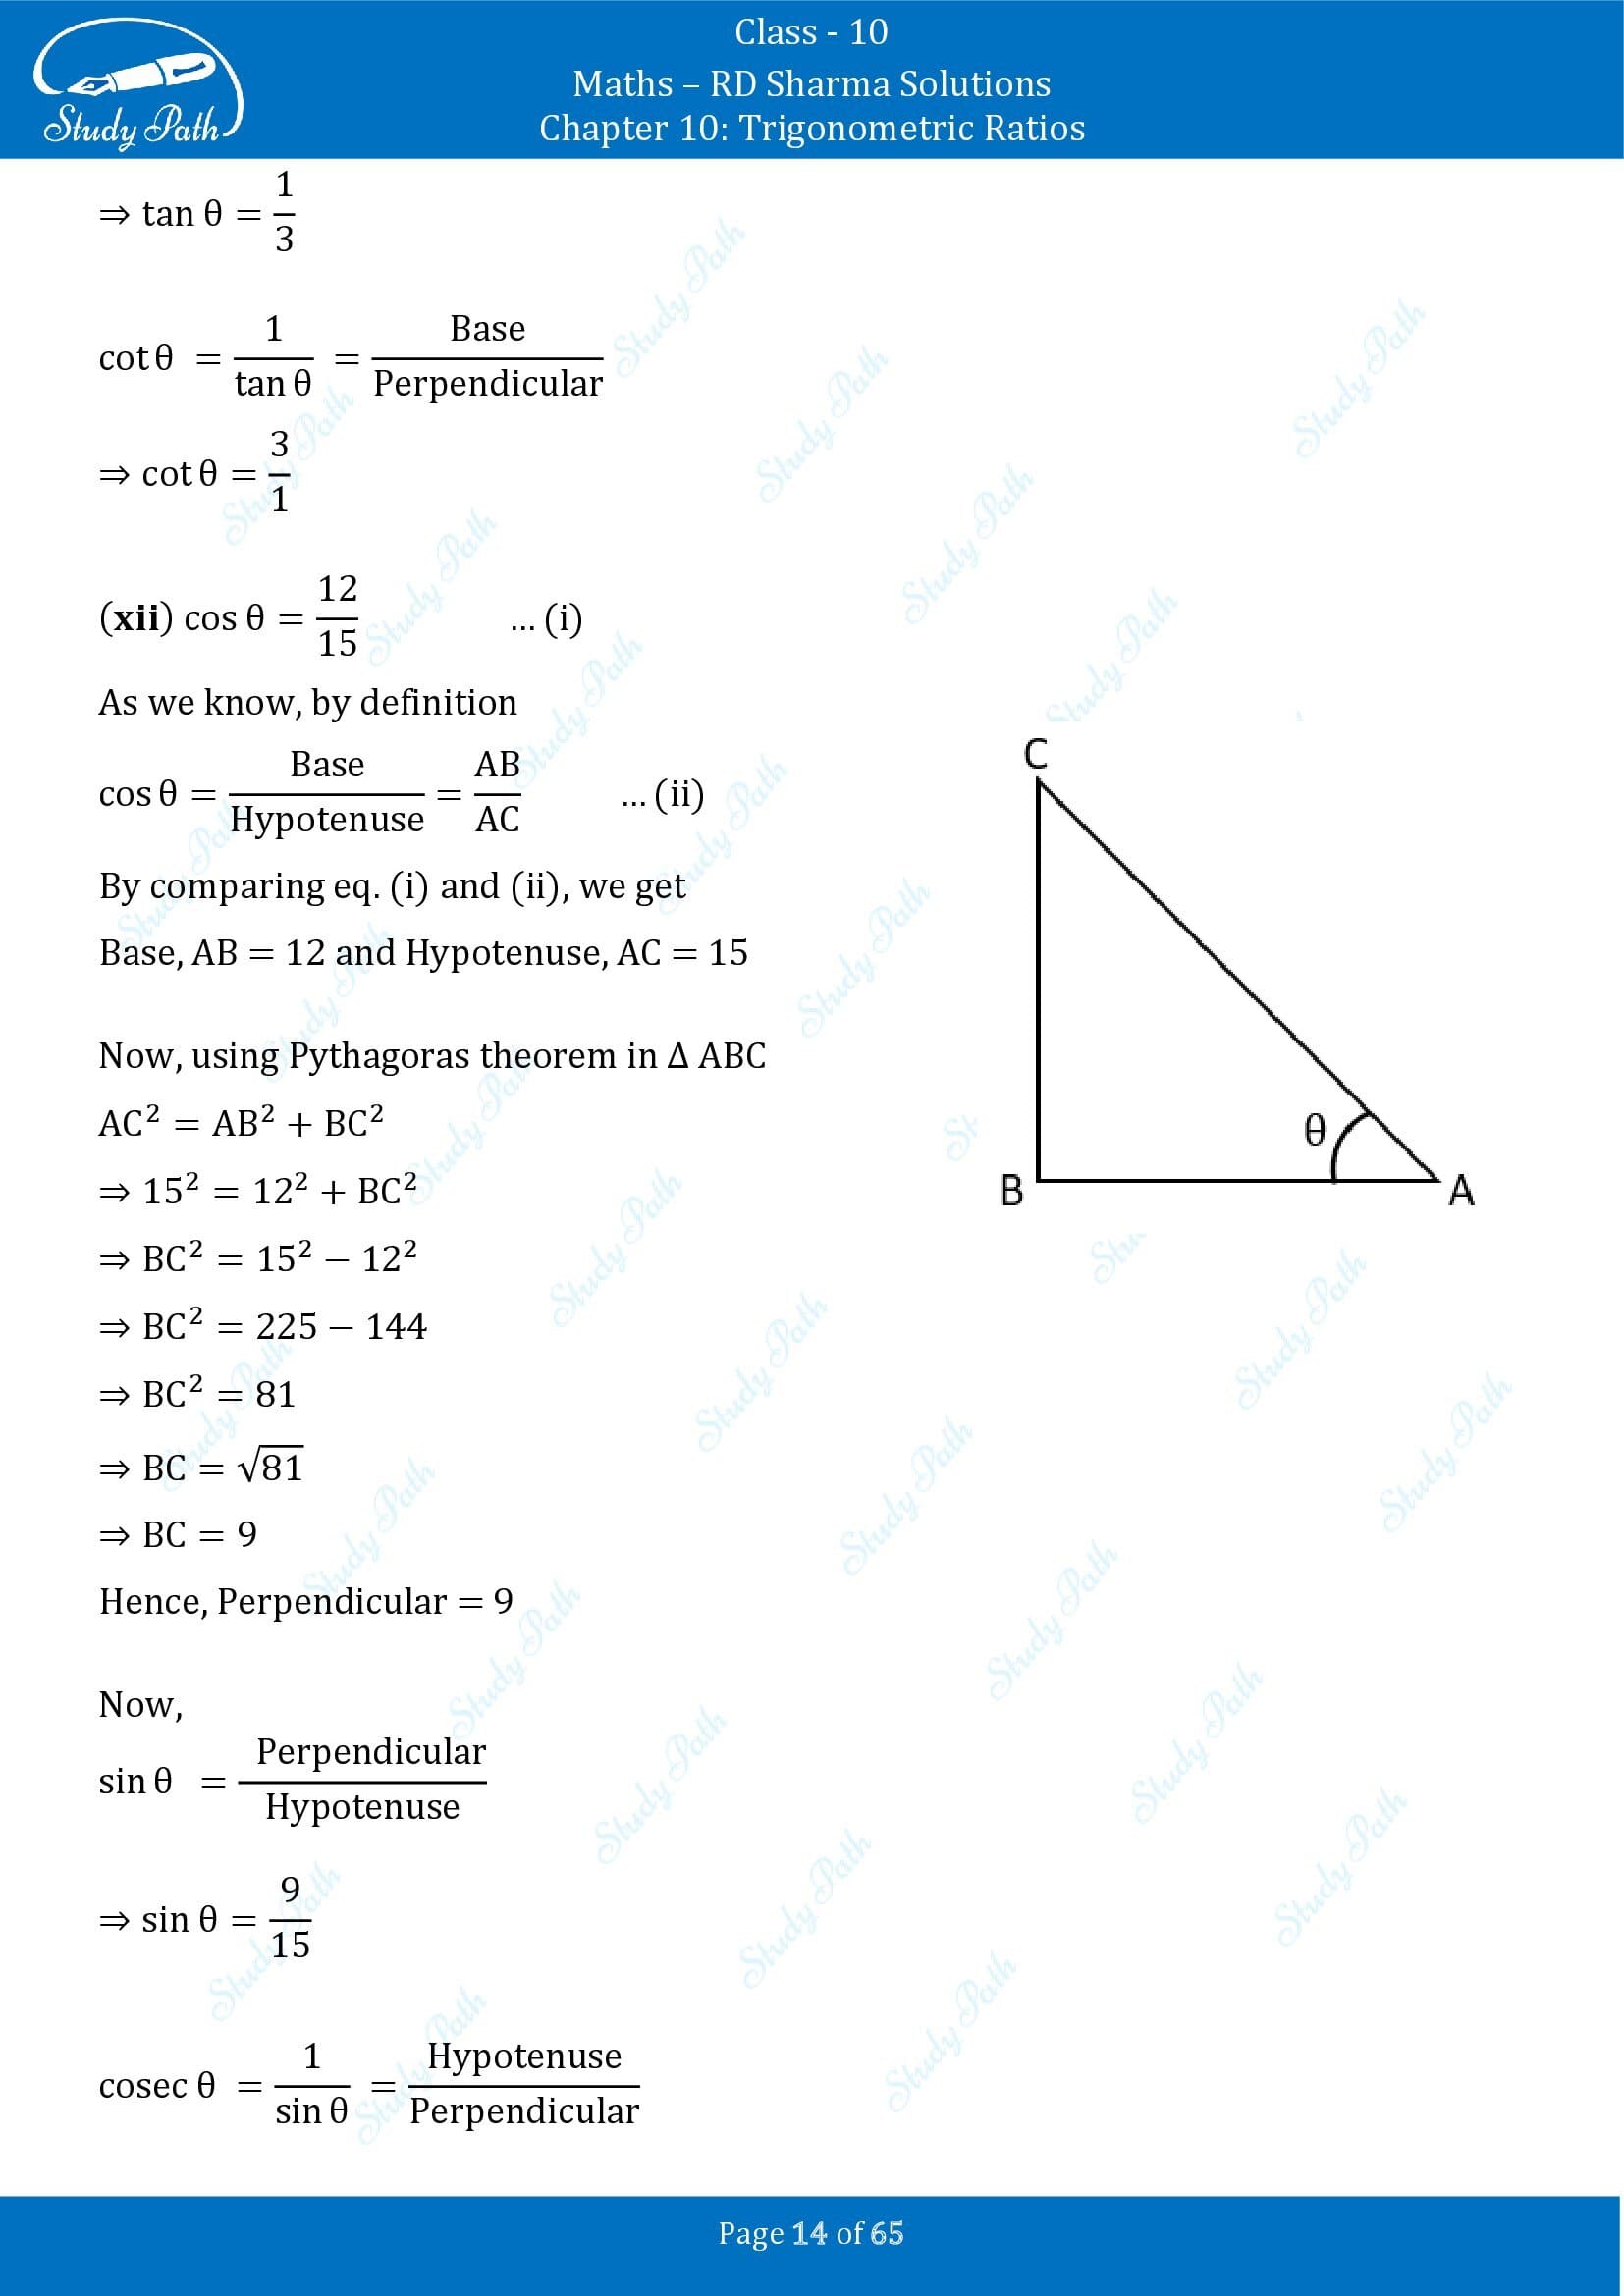 RD Sharma Solutions Class 10 Chapter 10 Trigonometric Ratios Exercise 10.1 00014